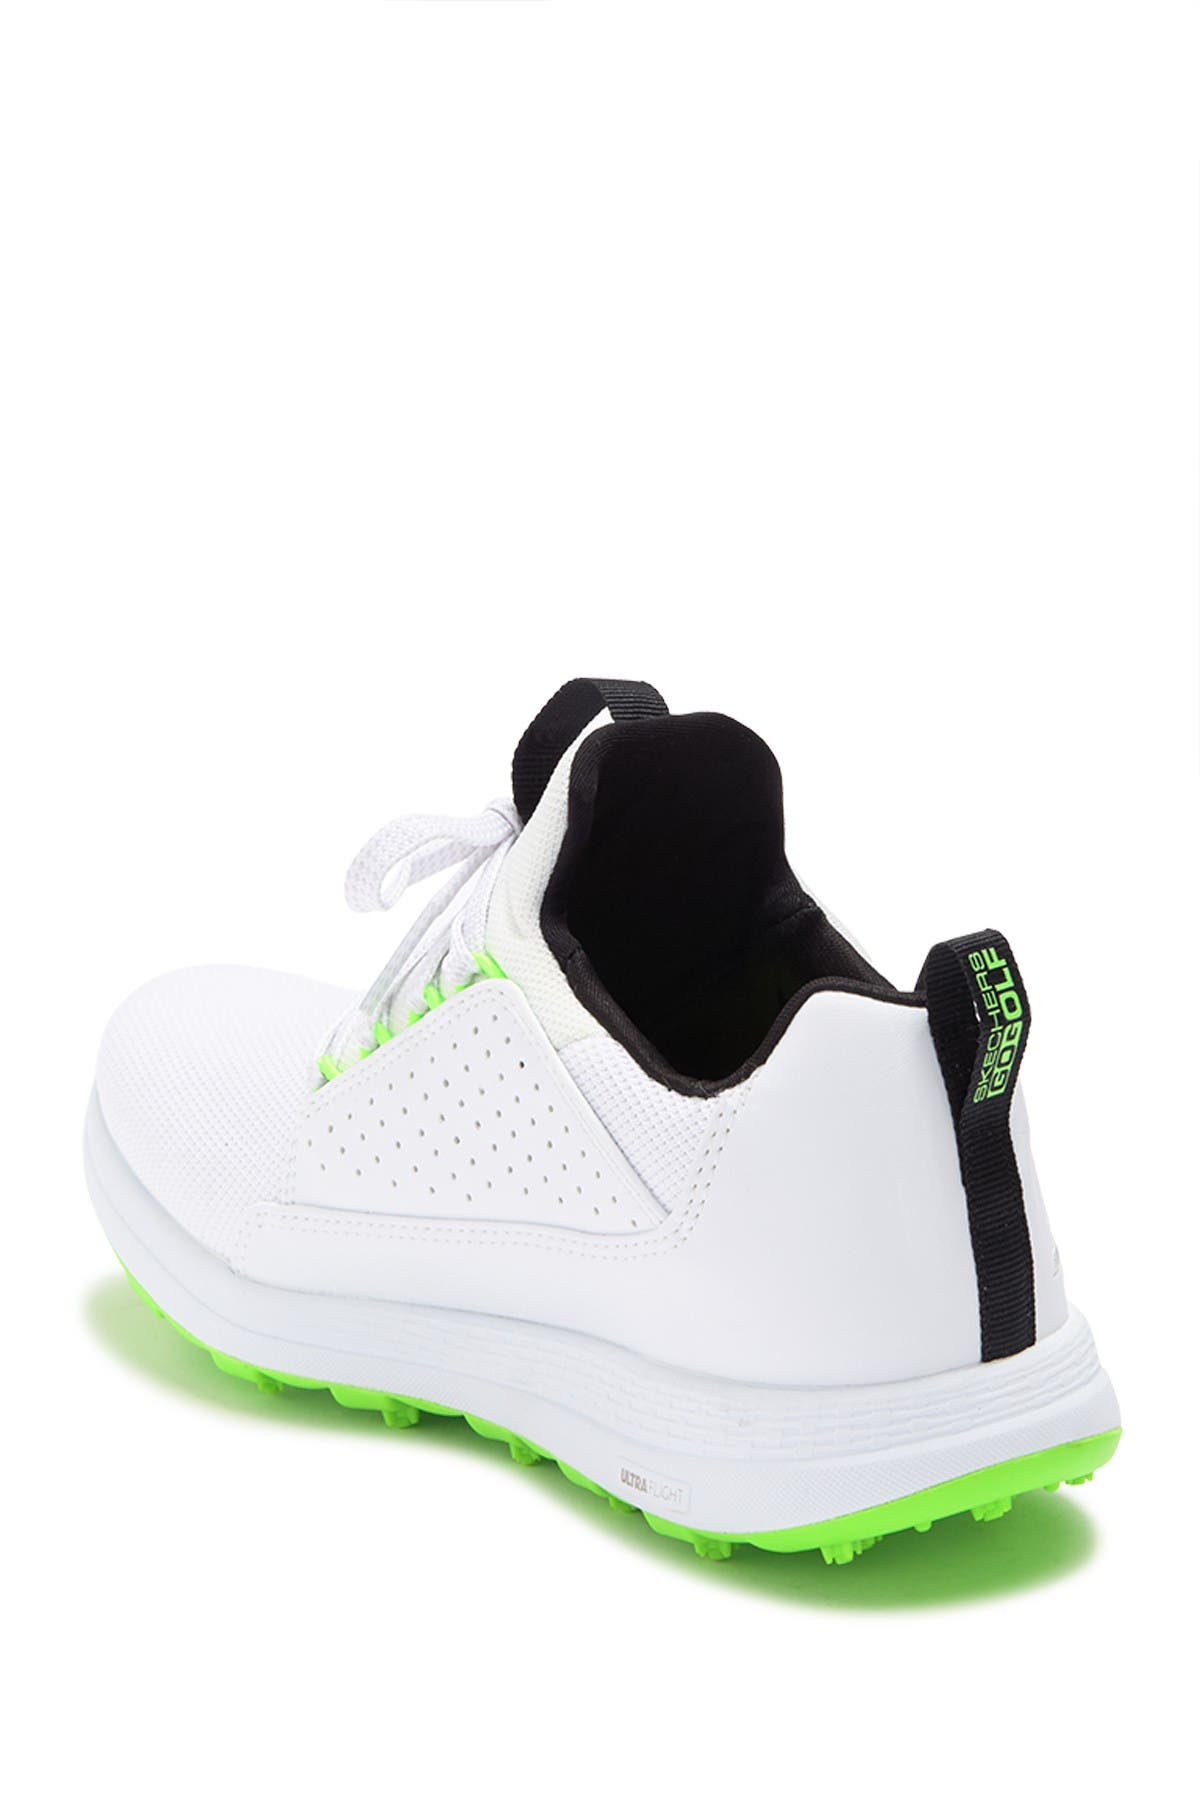 Skechers | Go Golf Lace Up Sneaker 